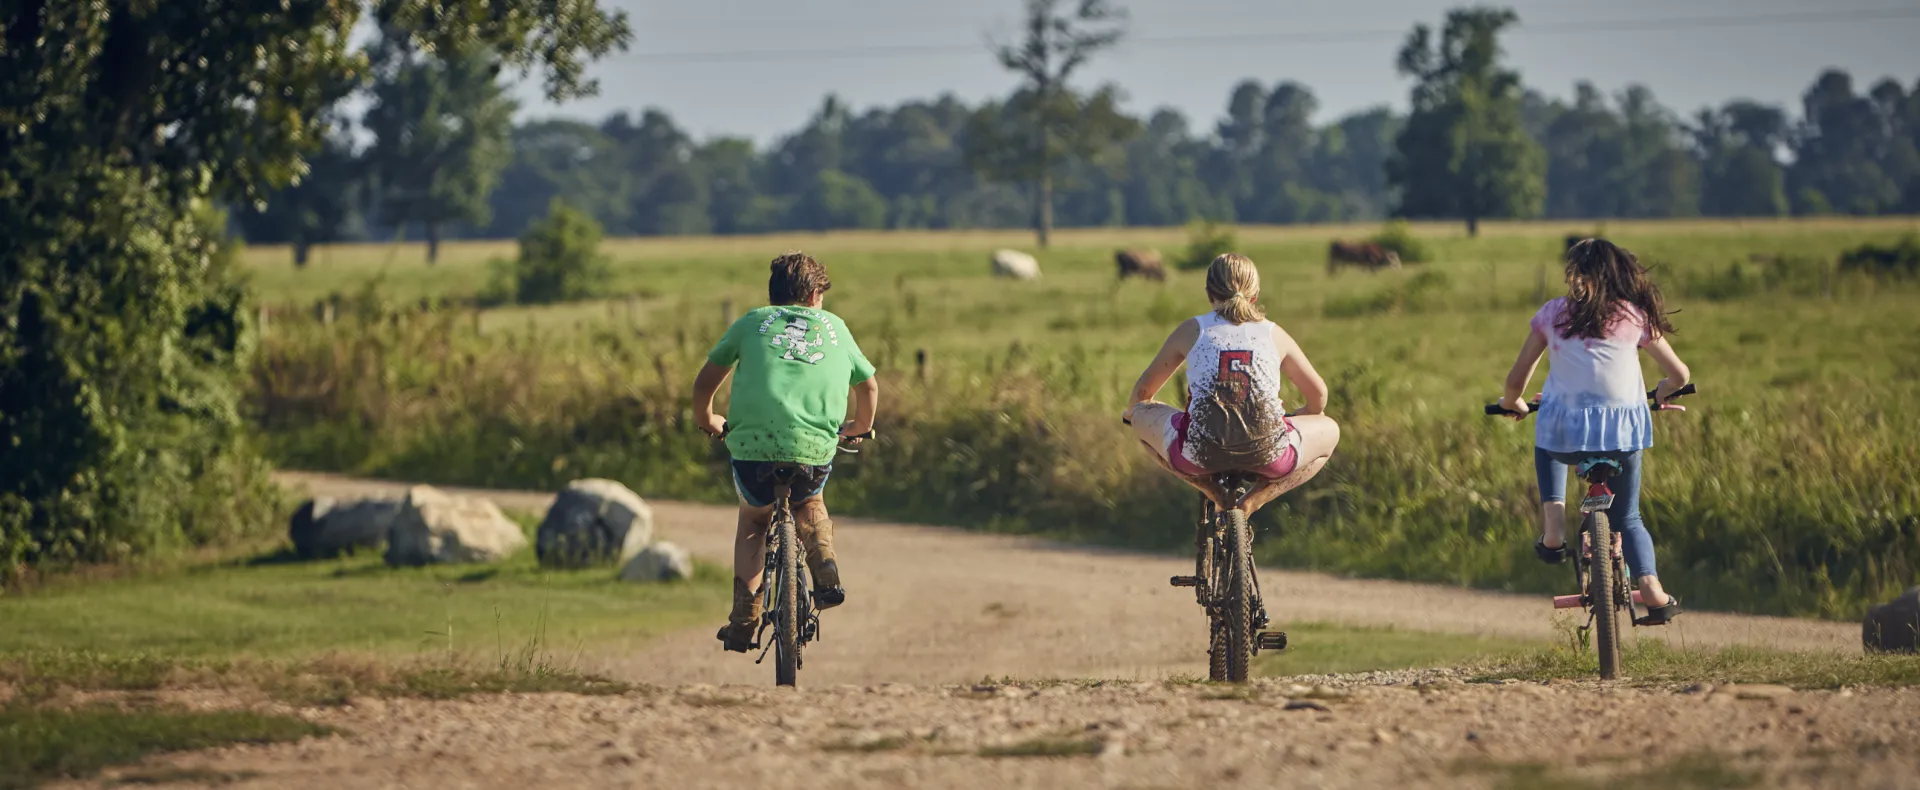 3 white kids on bikes rural